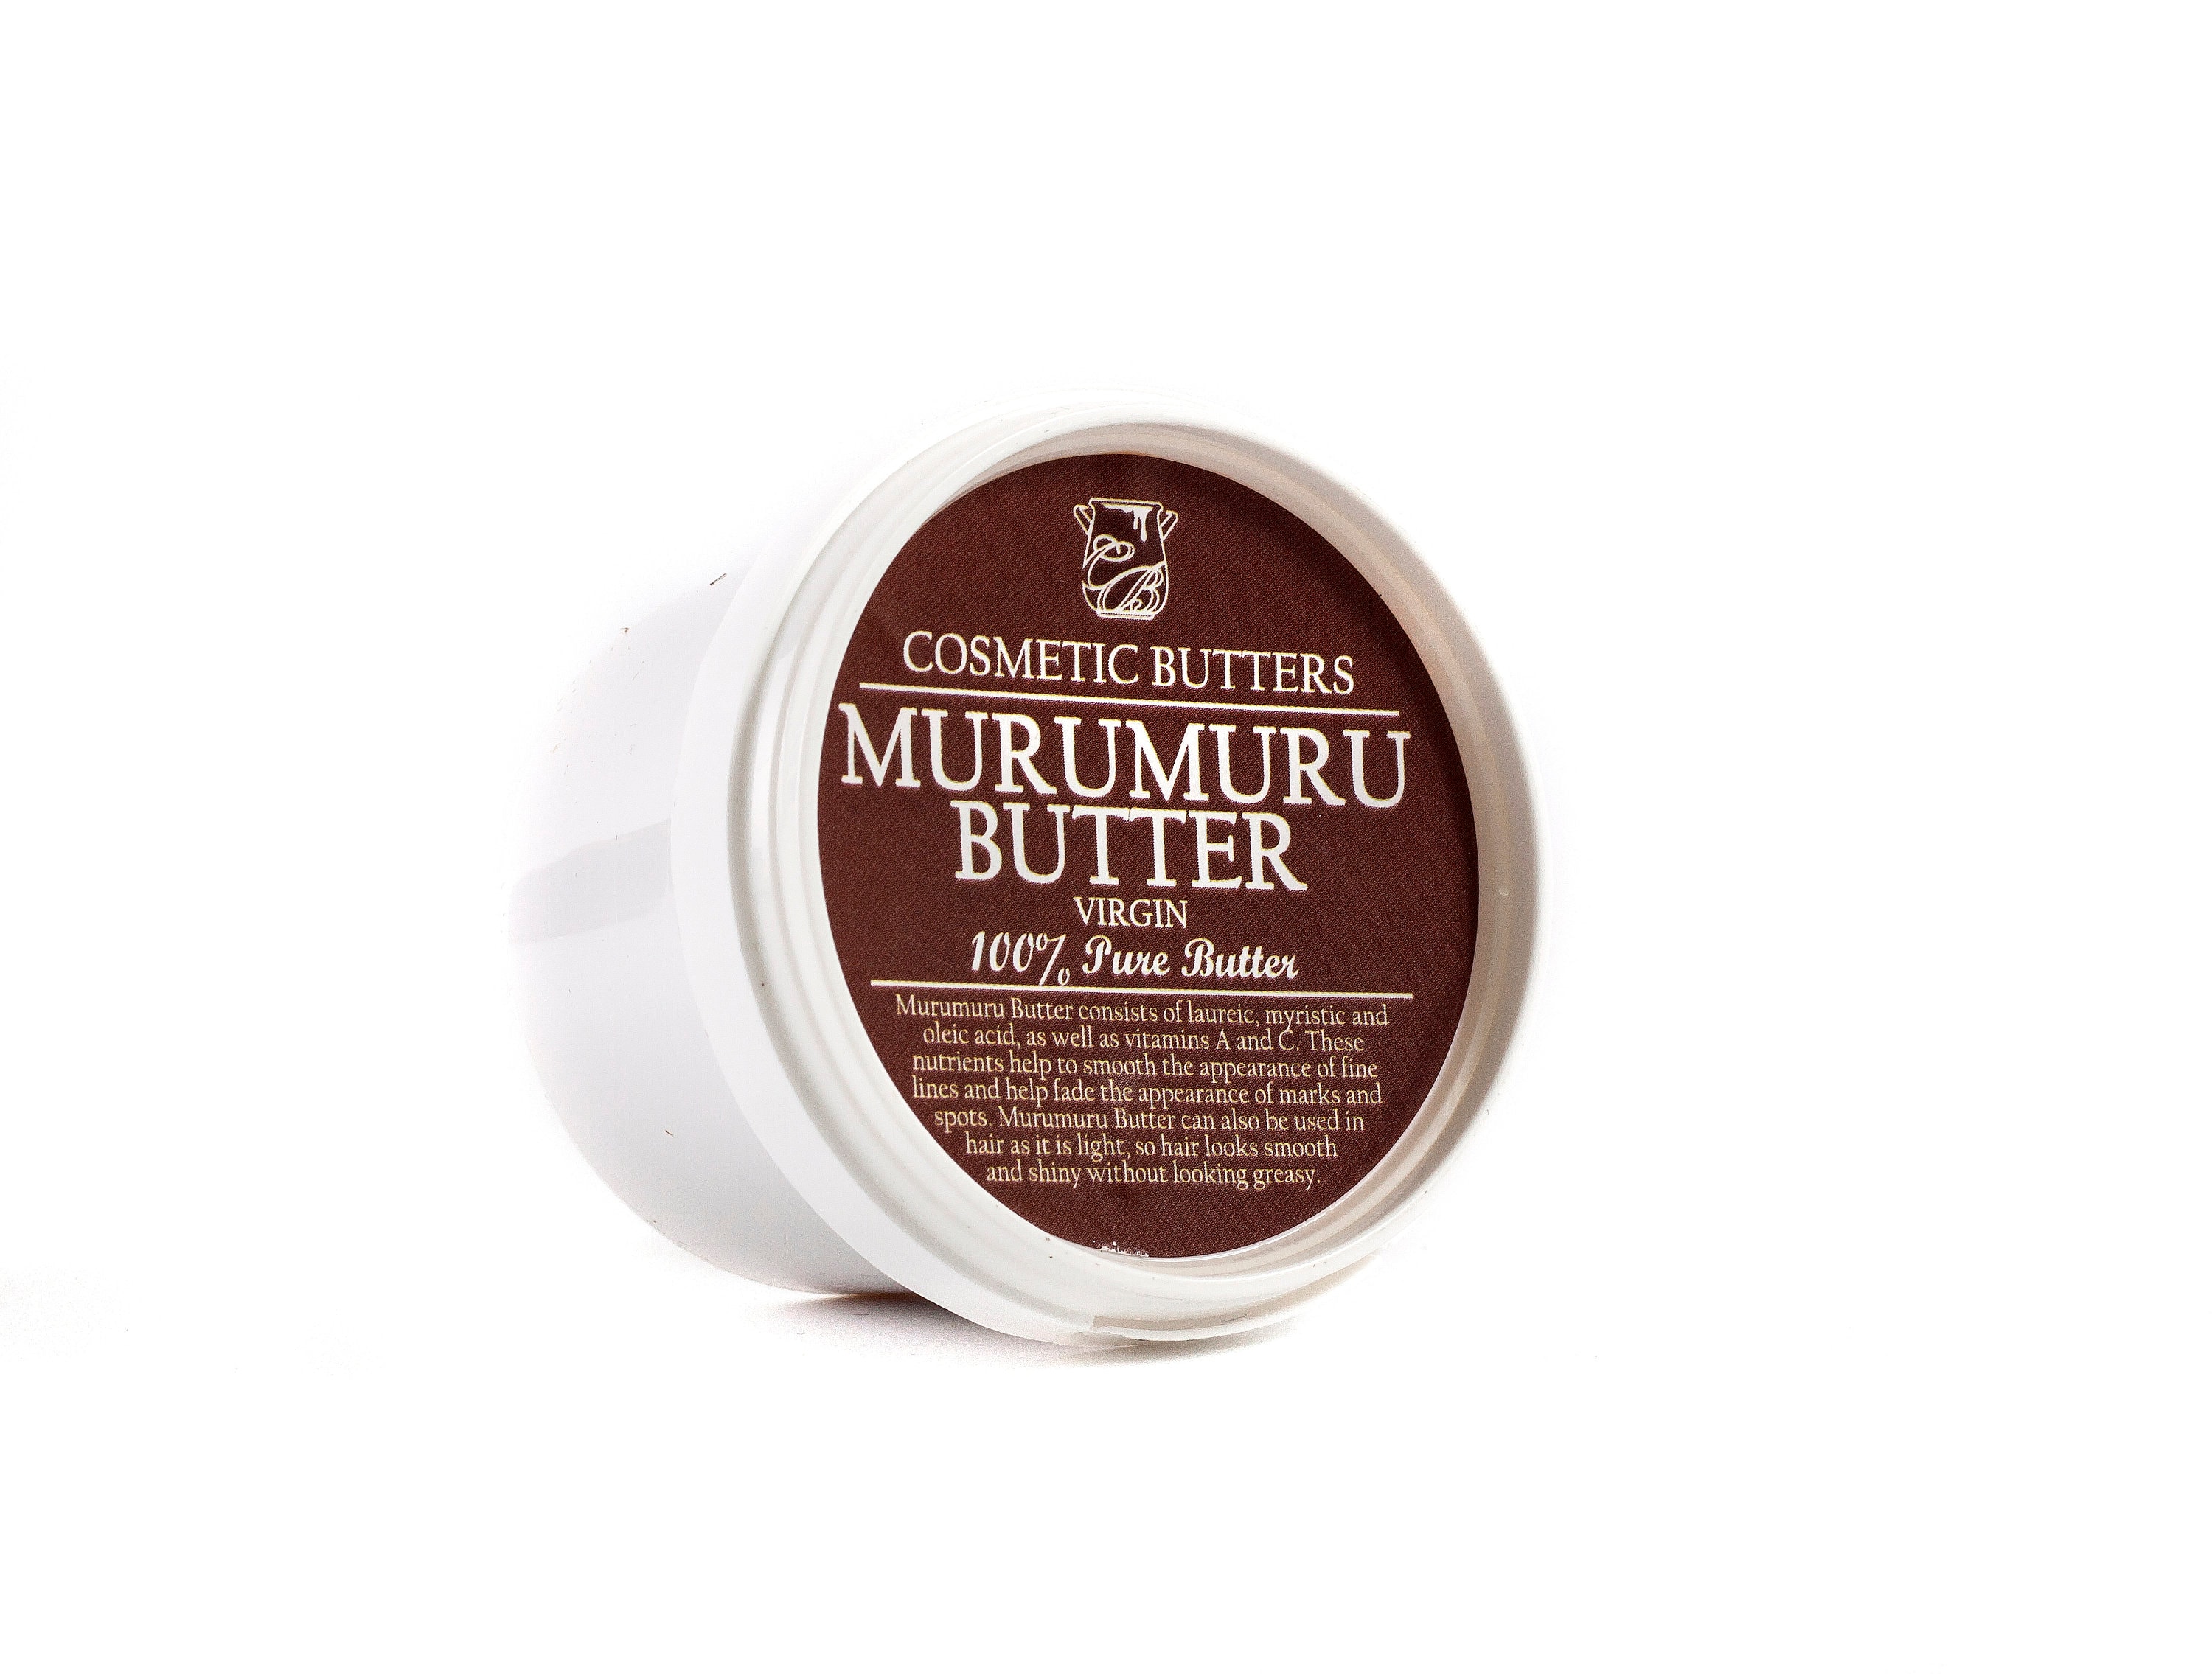 Murumuru Butter Virgin 100g -  Canada